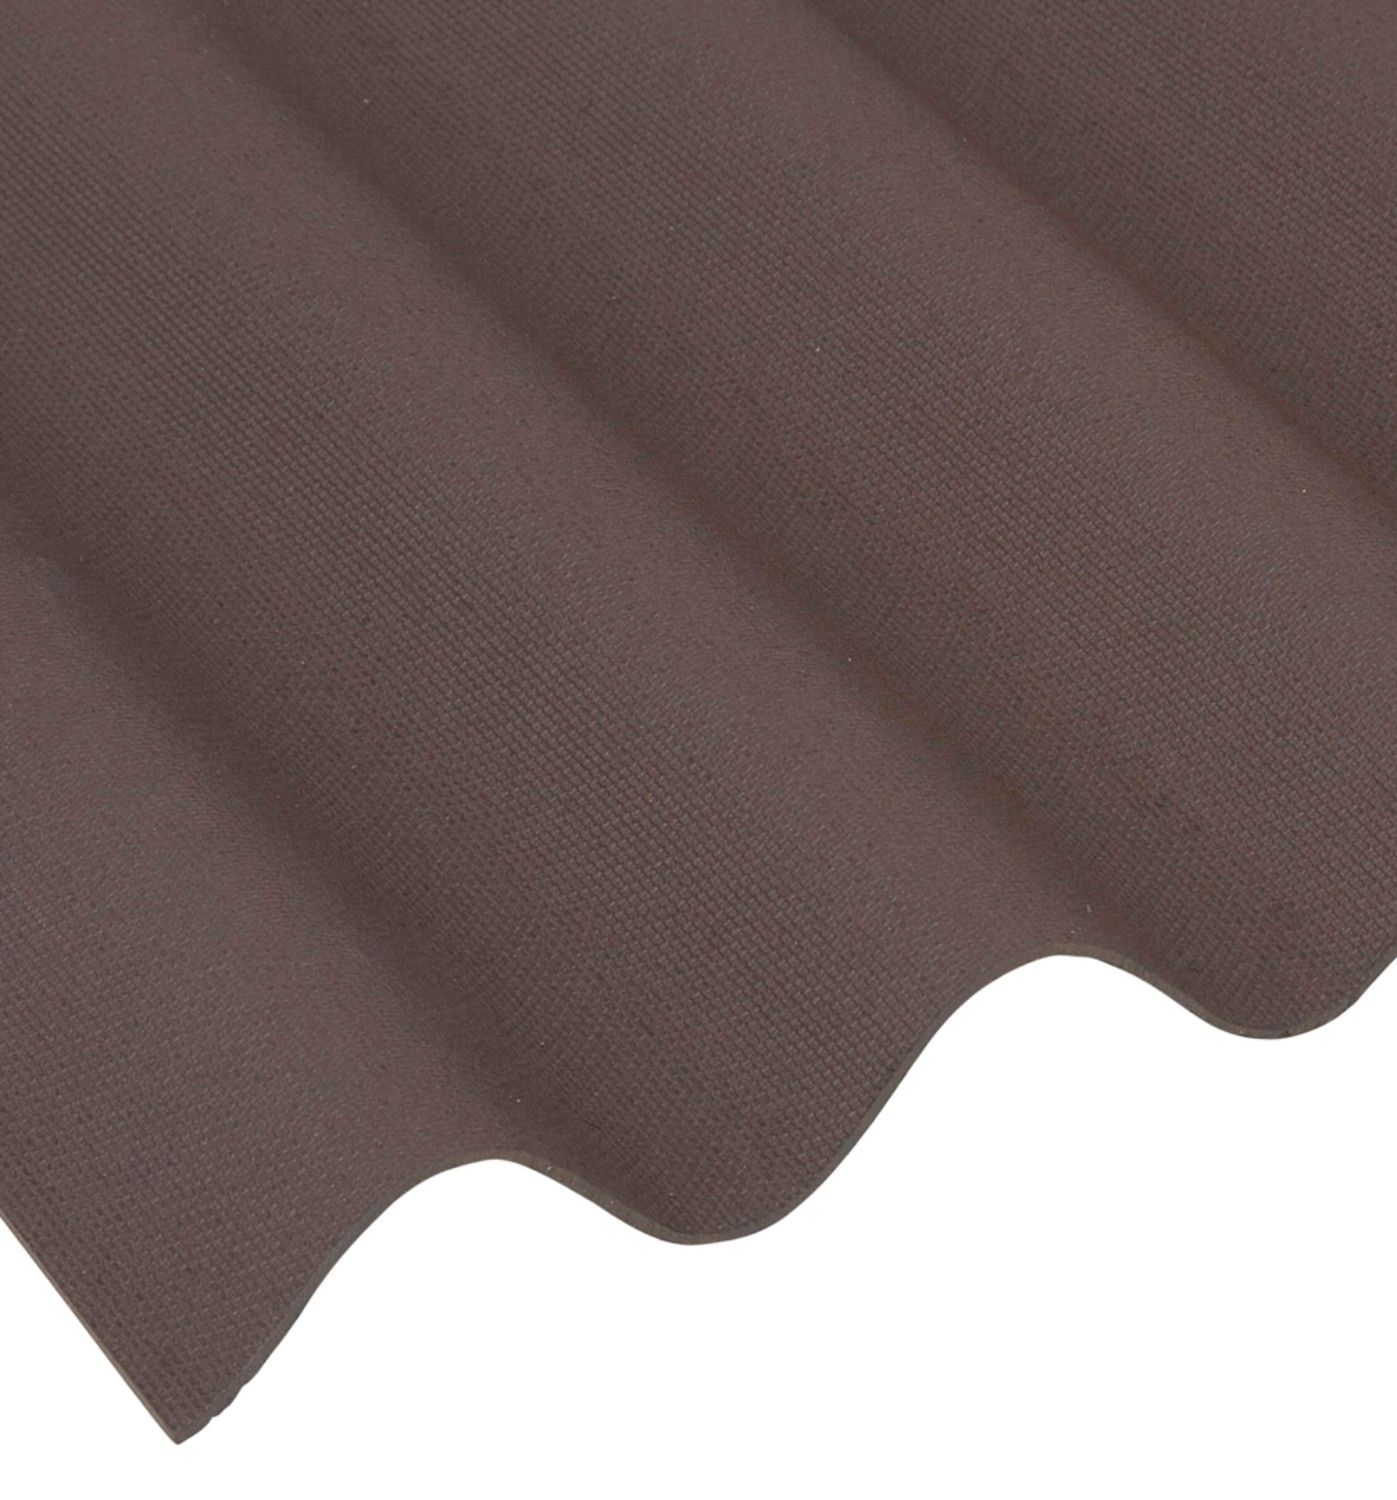 Coroline Corrugated Bitumen Roof Sheet - Brown (2000 x 950mm)